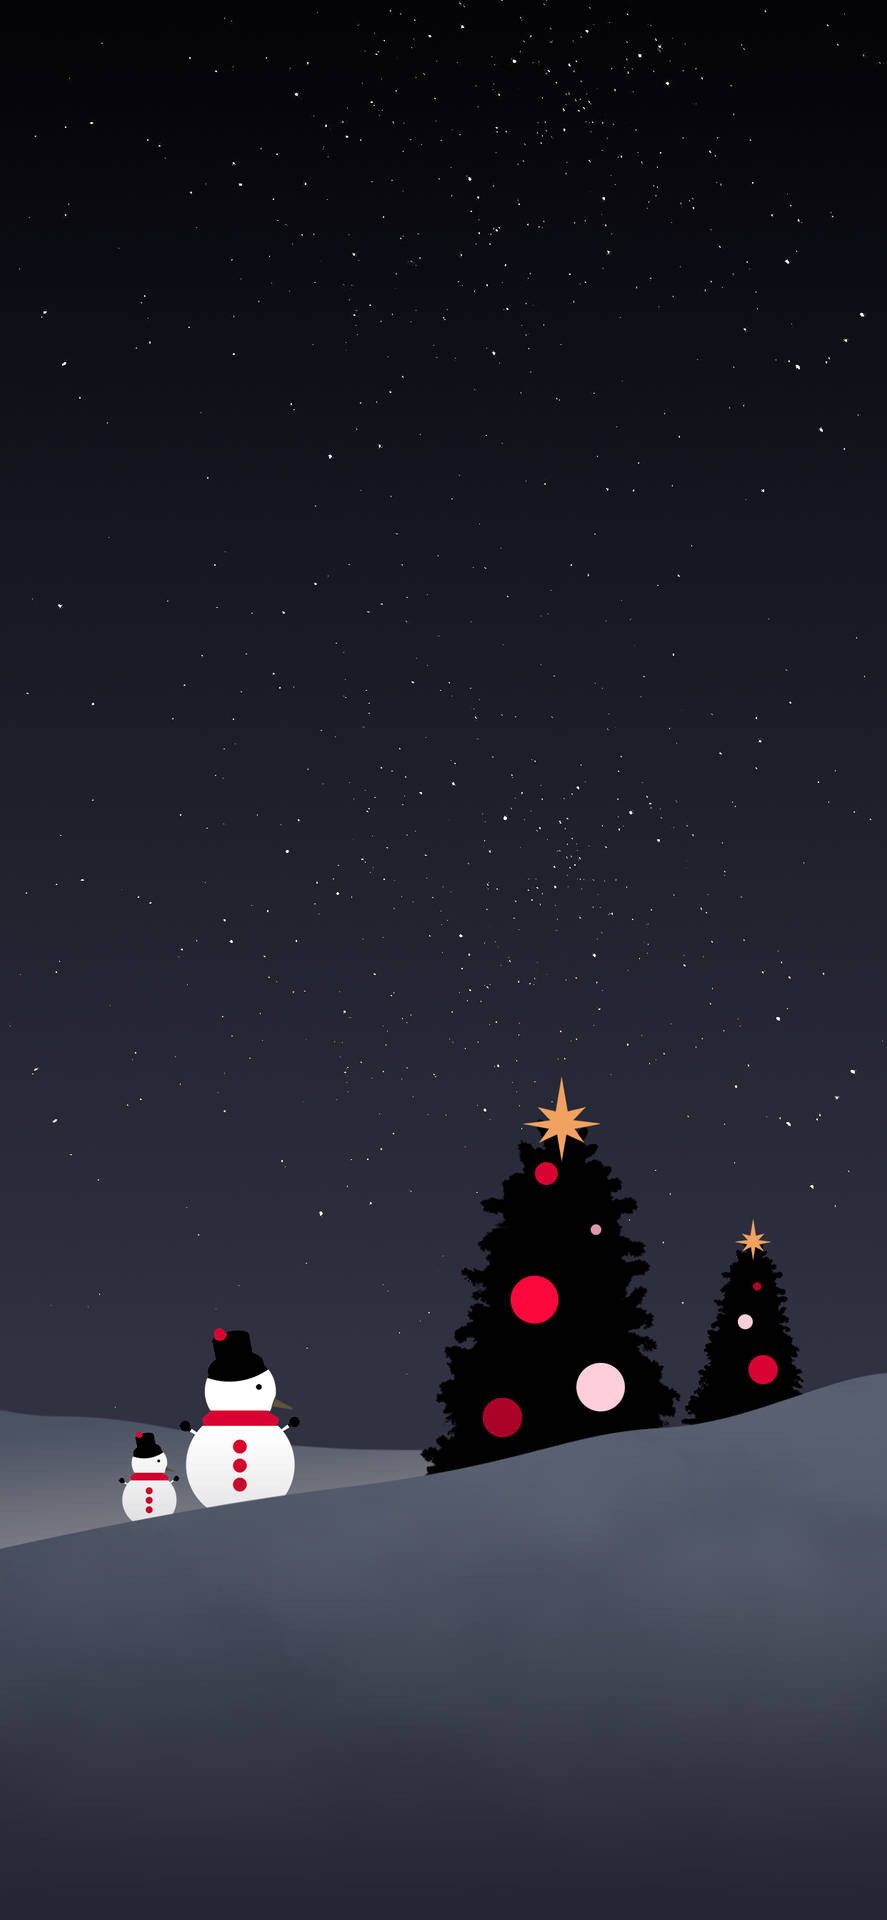 Juletræ og sne mand i sneen Wallpaper